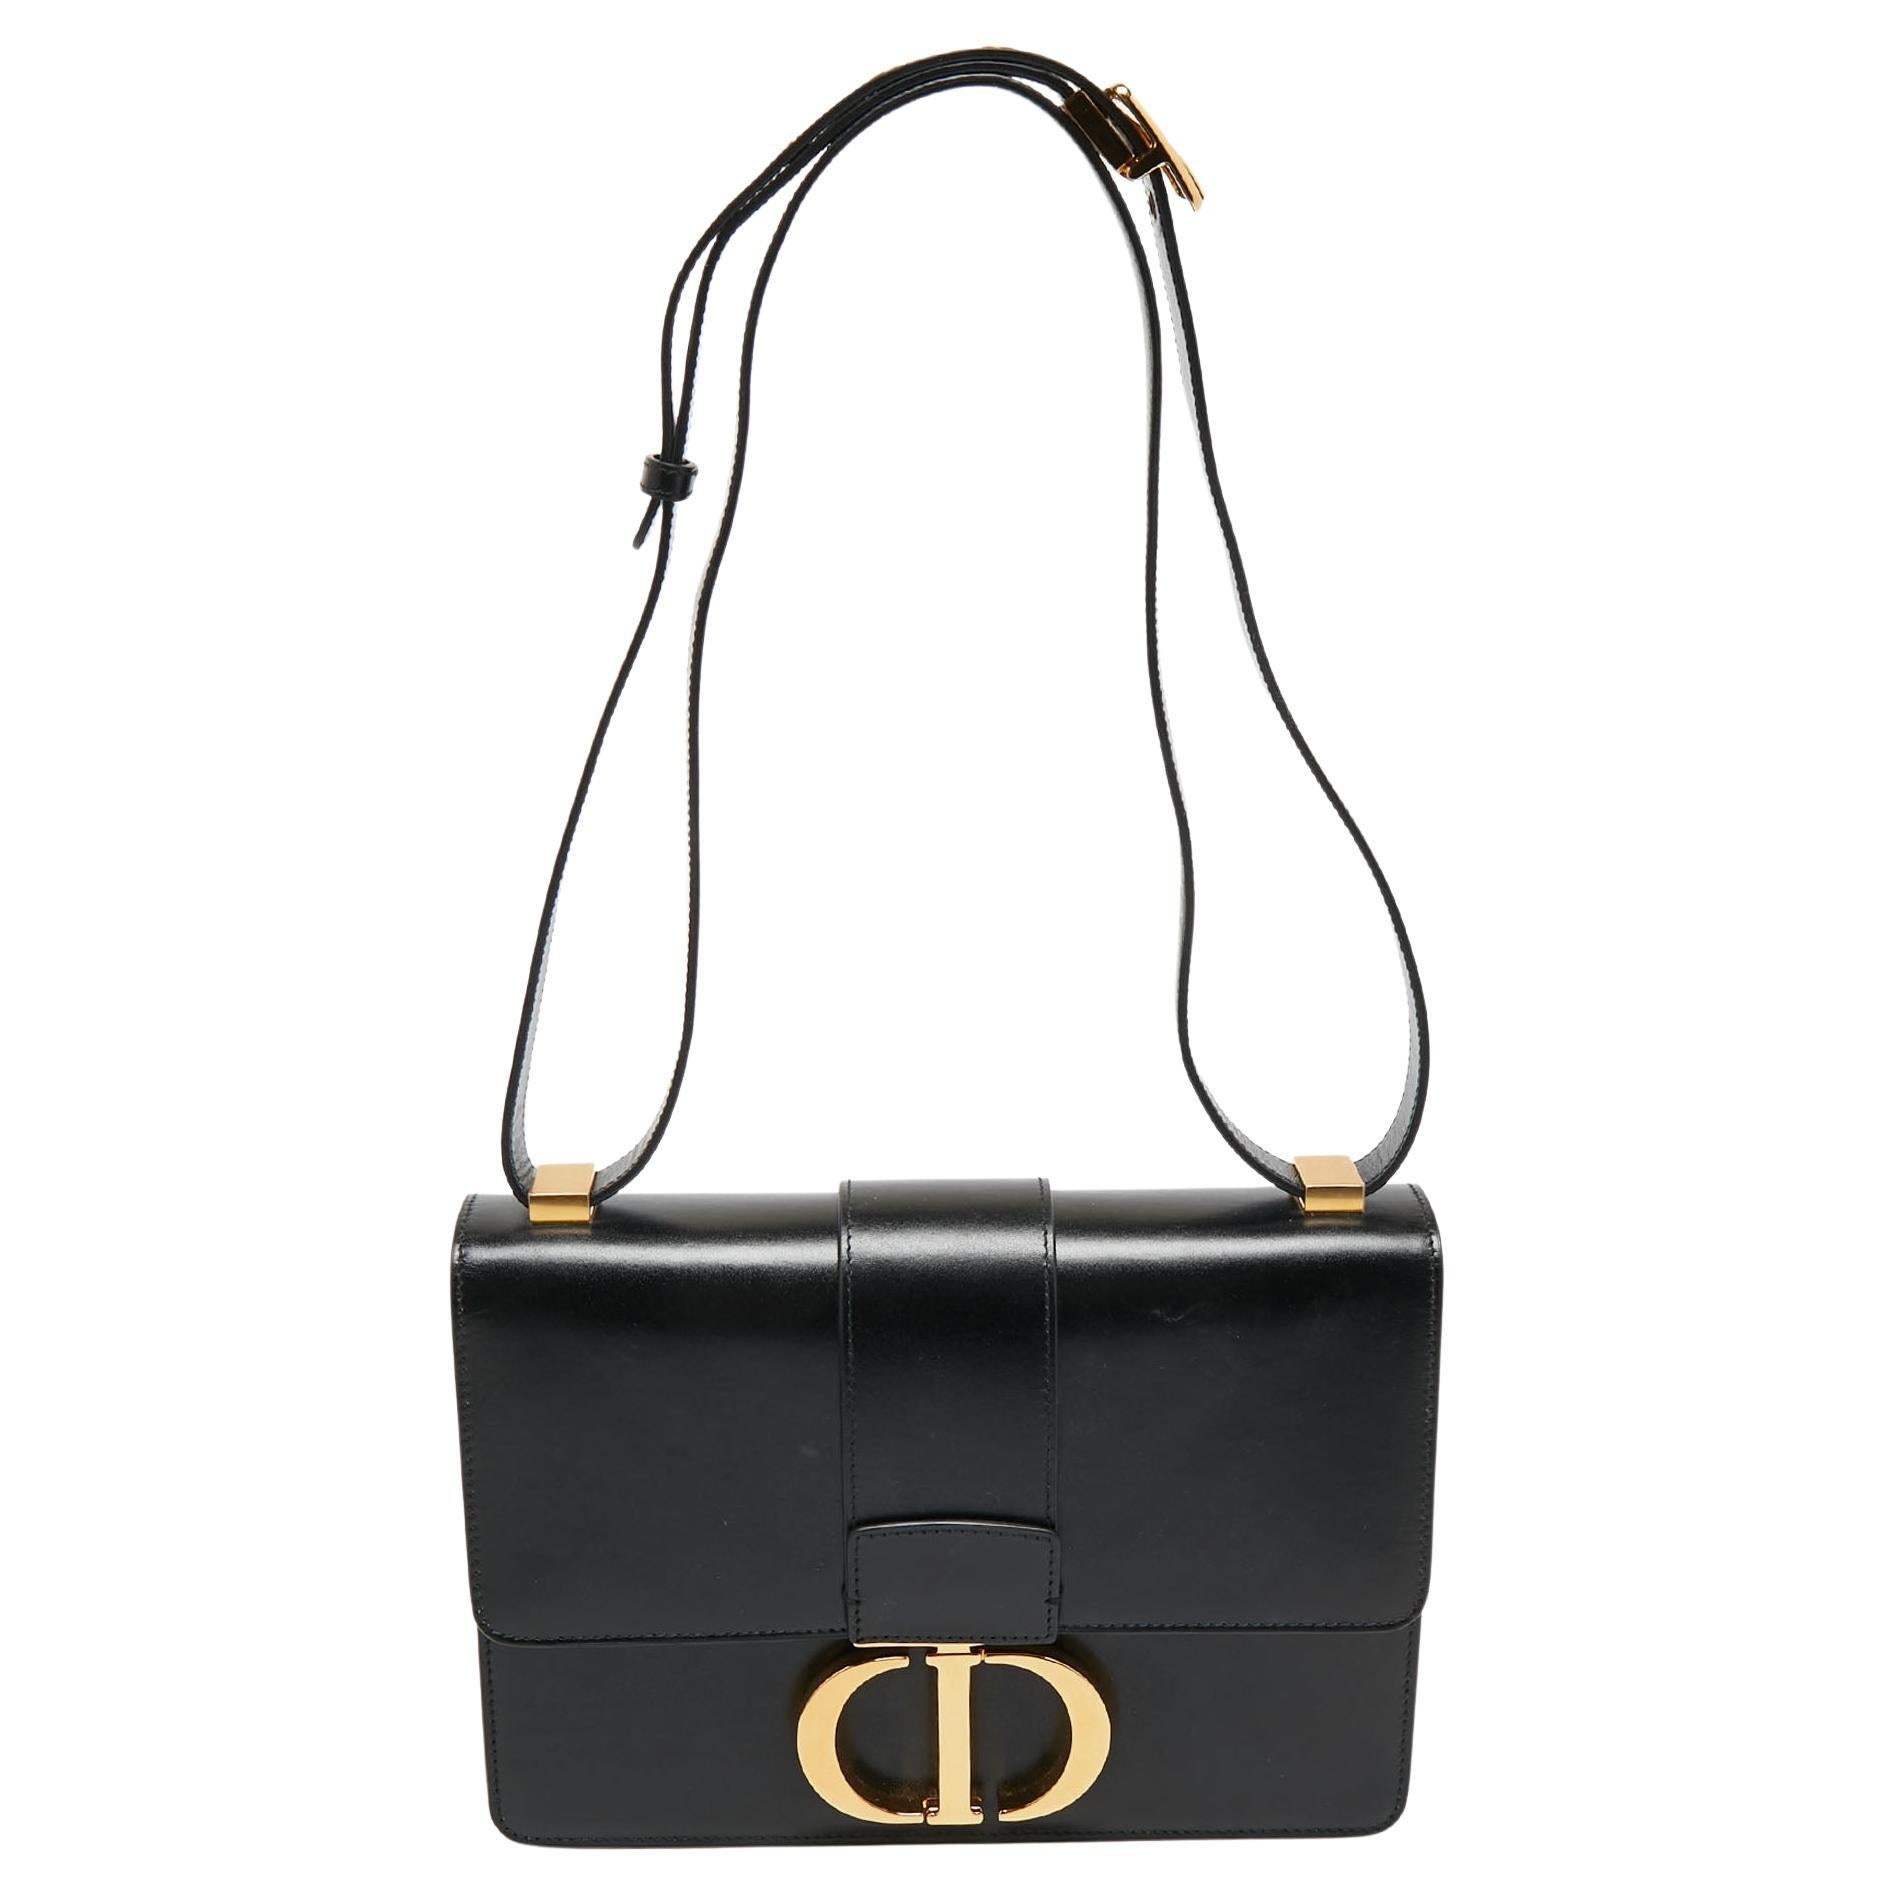 Dior Black Leather 30 Montaigne Shoulder Bag